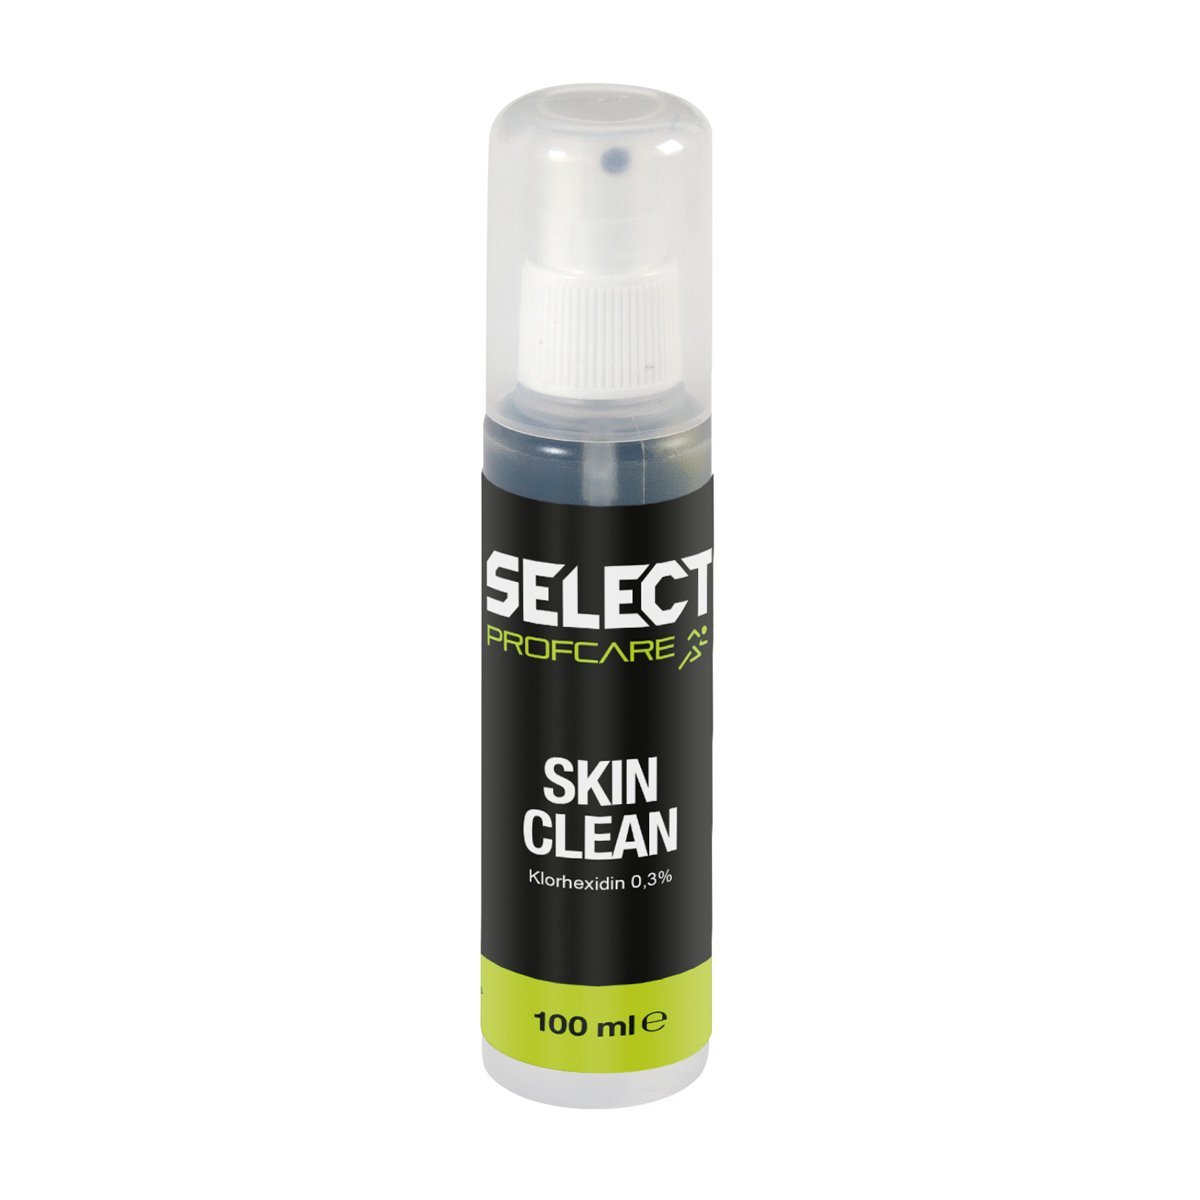 Select Skin Clean 100ml thumbnail